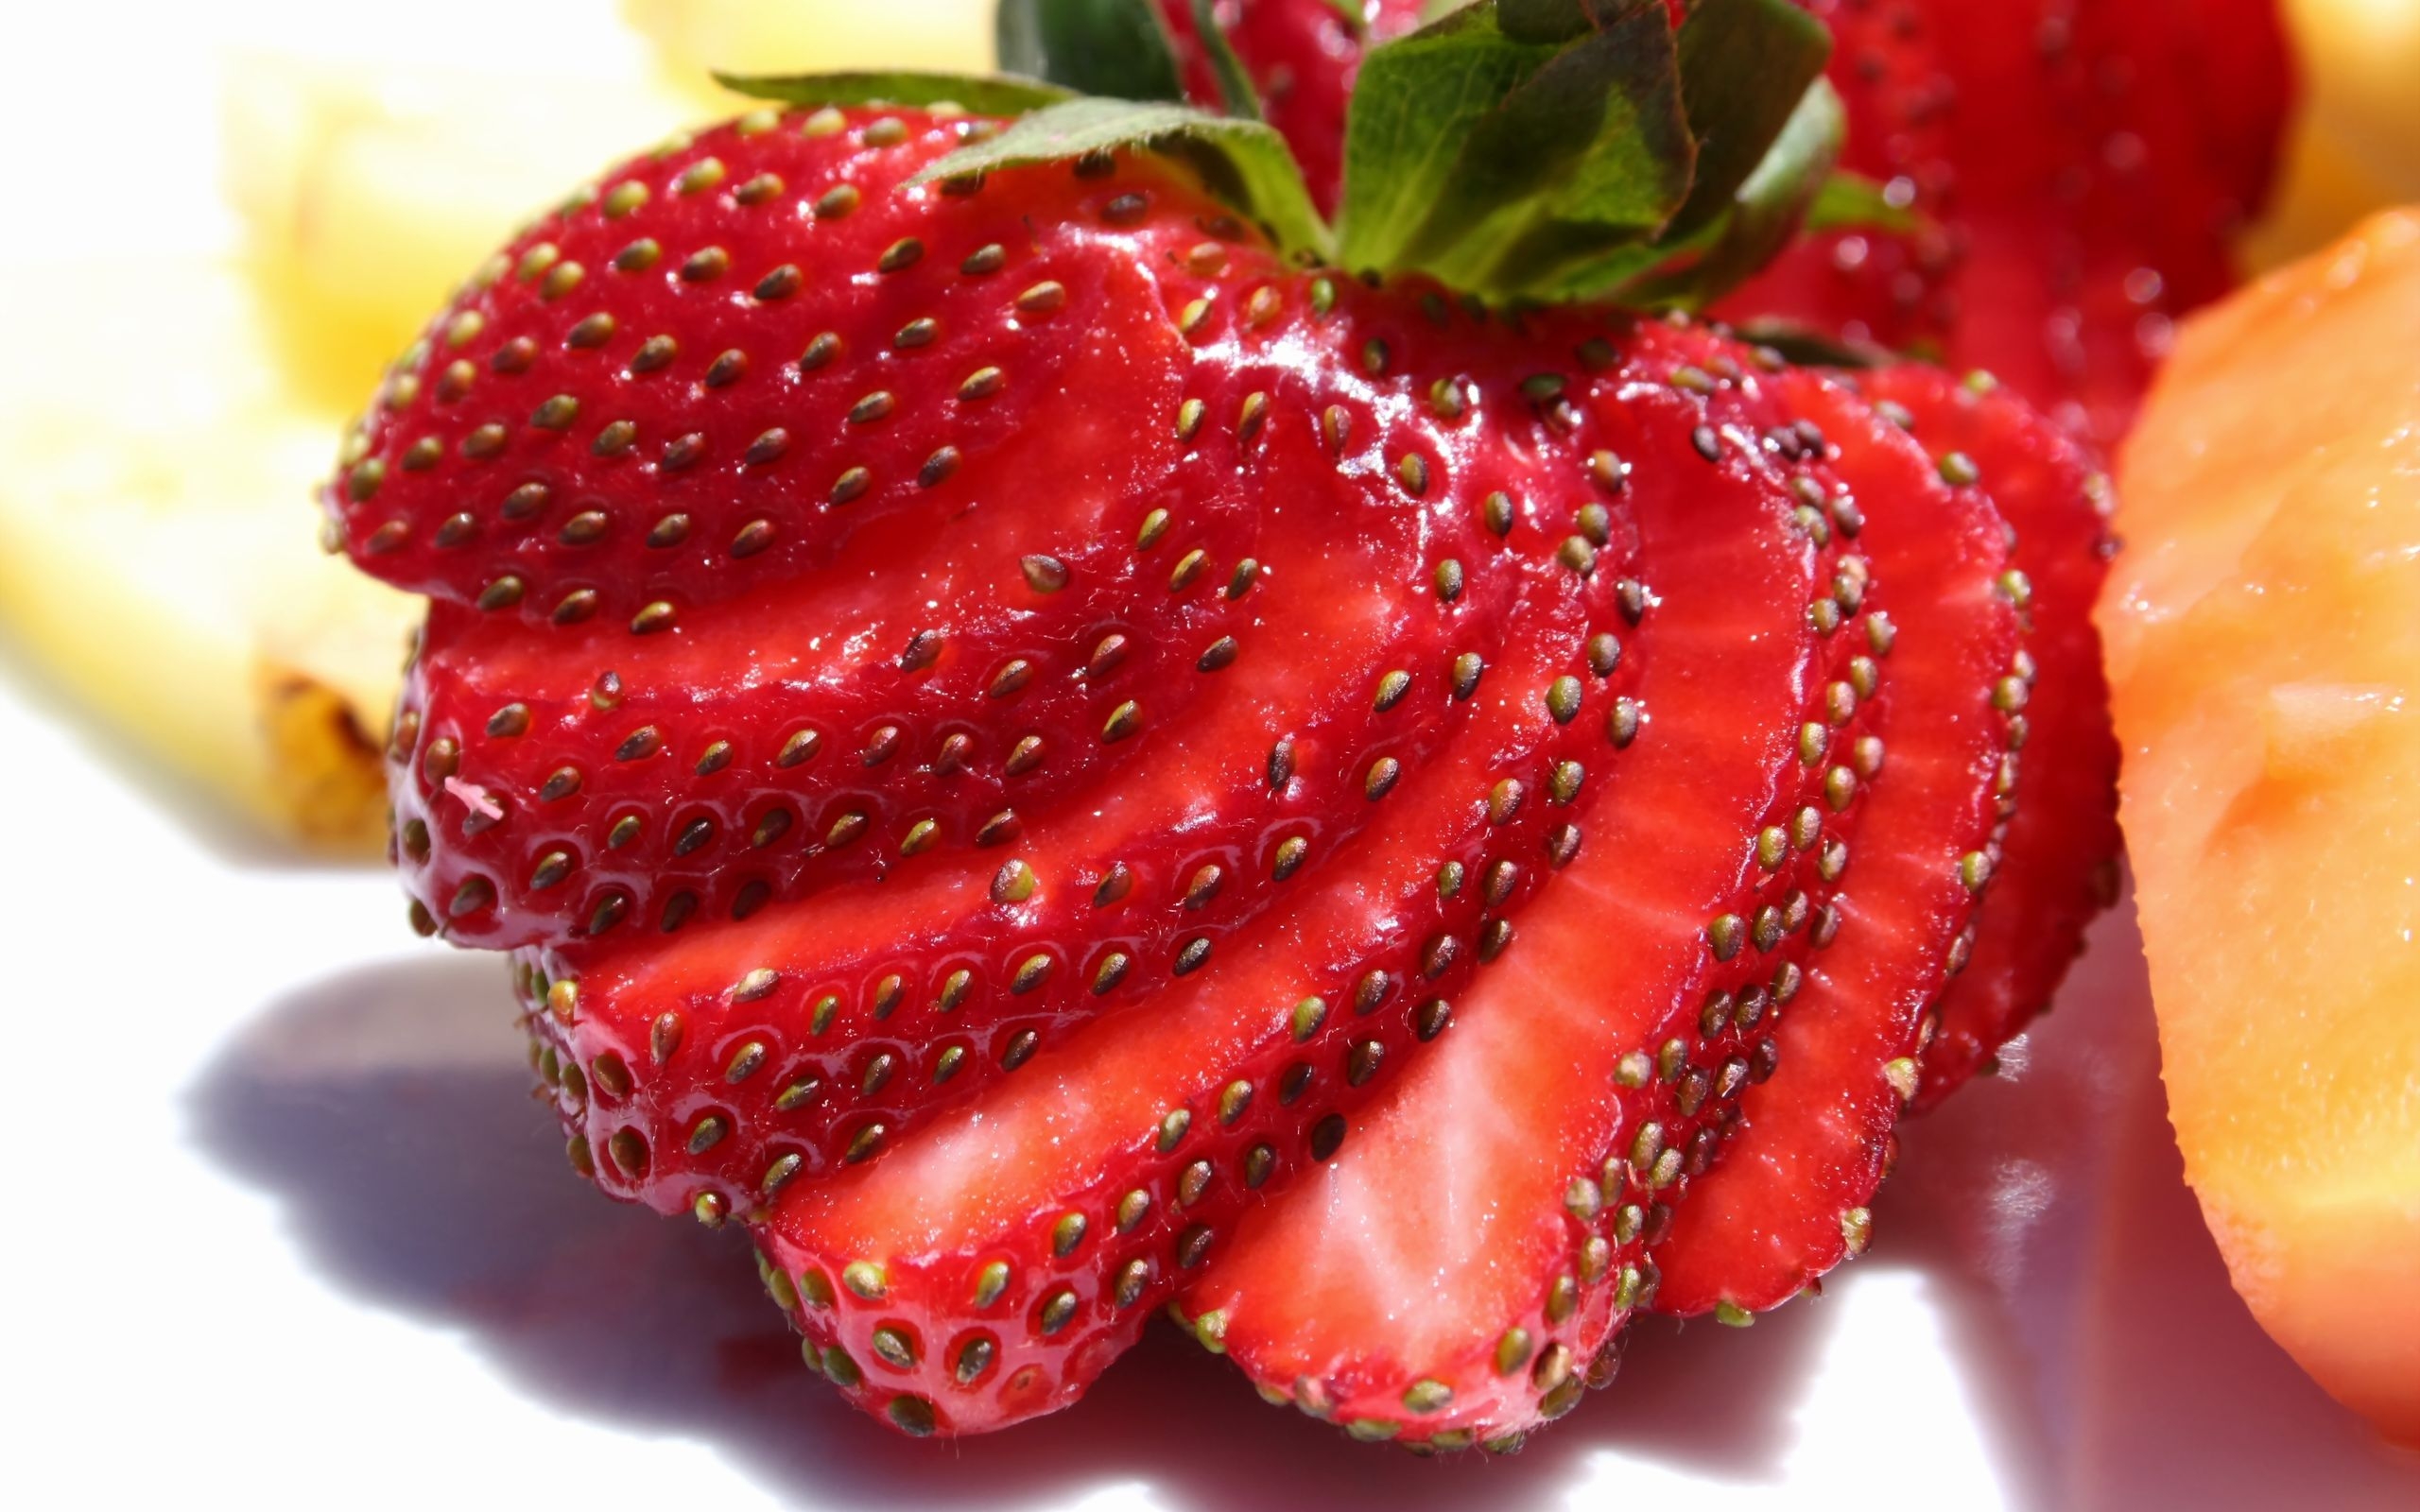 Beautifully sliced strawberries